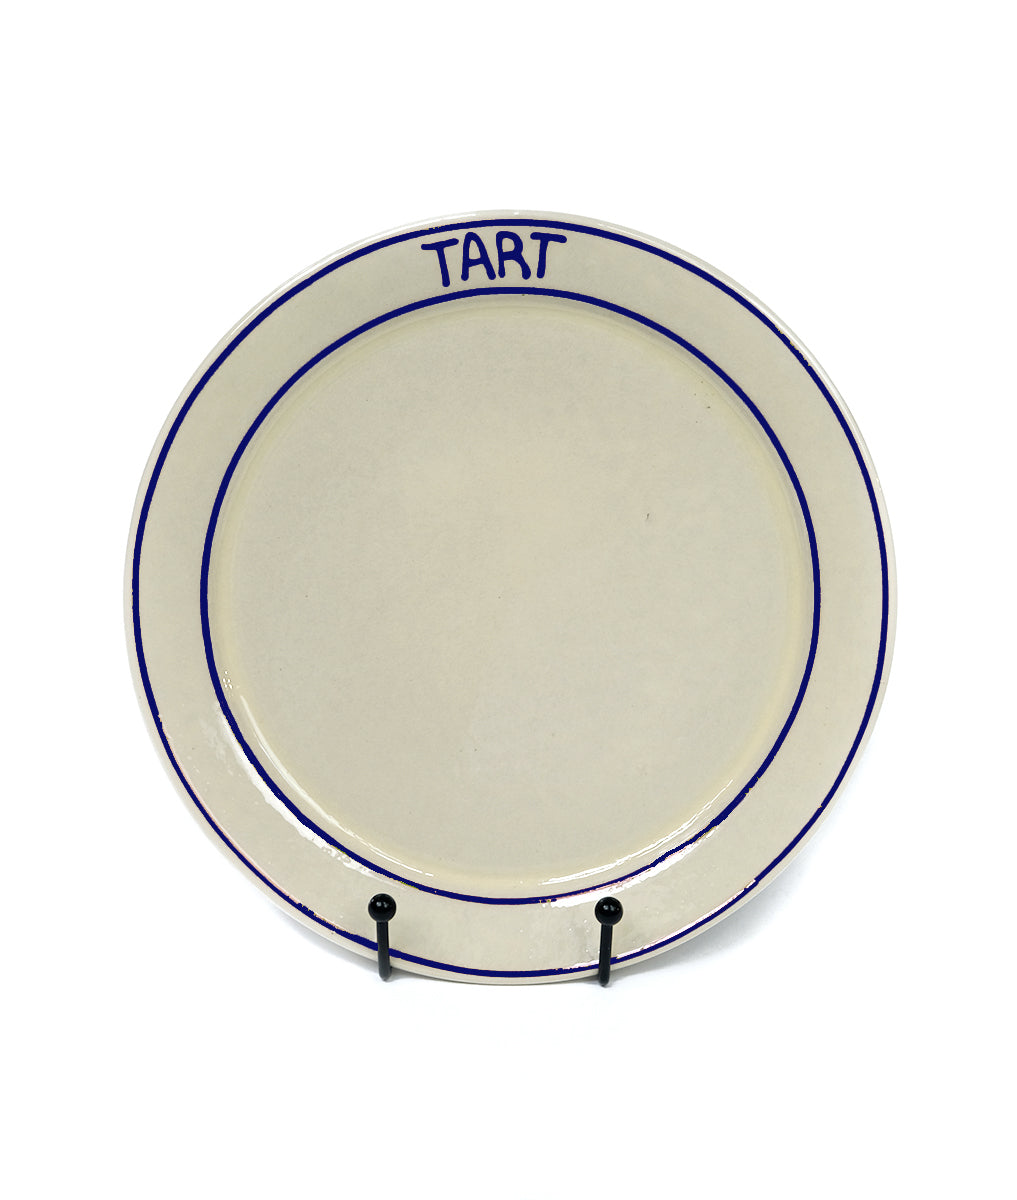 Tart London TART Plate - Blue